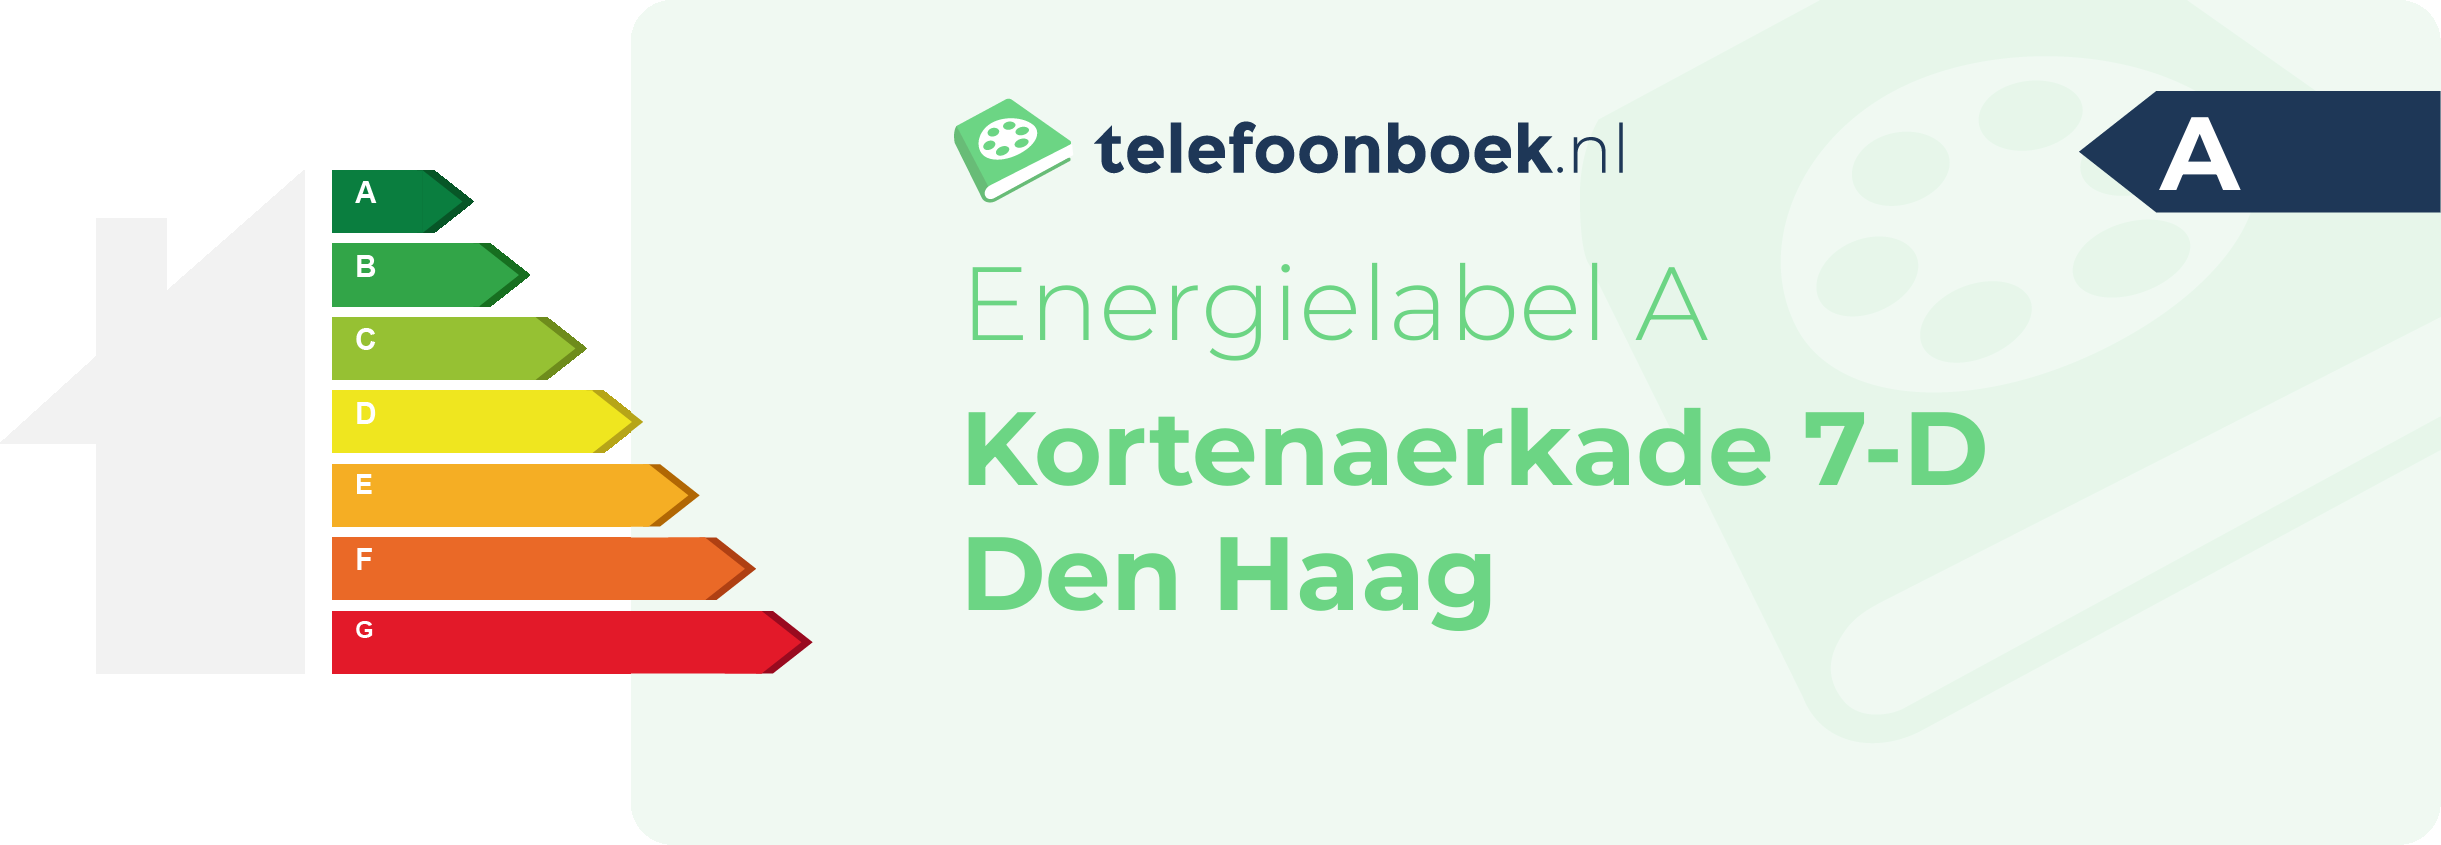 Energielabel Kortenaerkade 7-D Den Haag